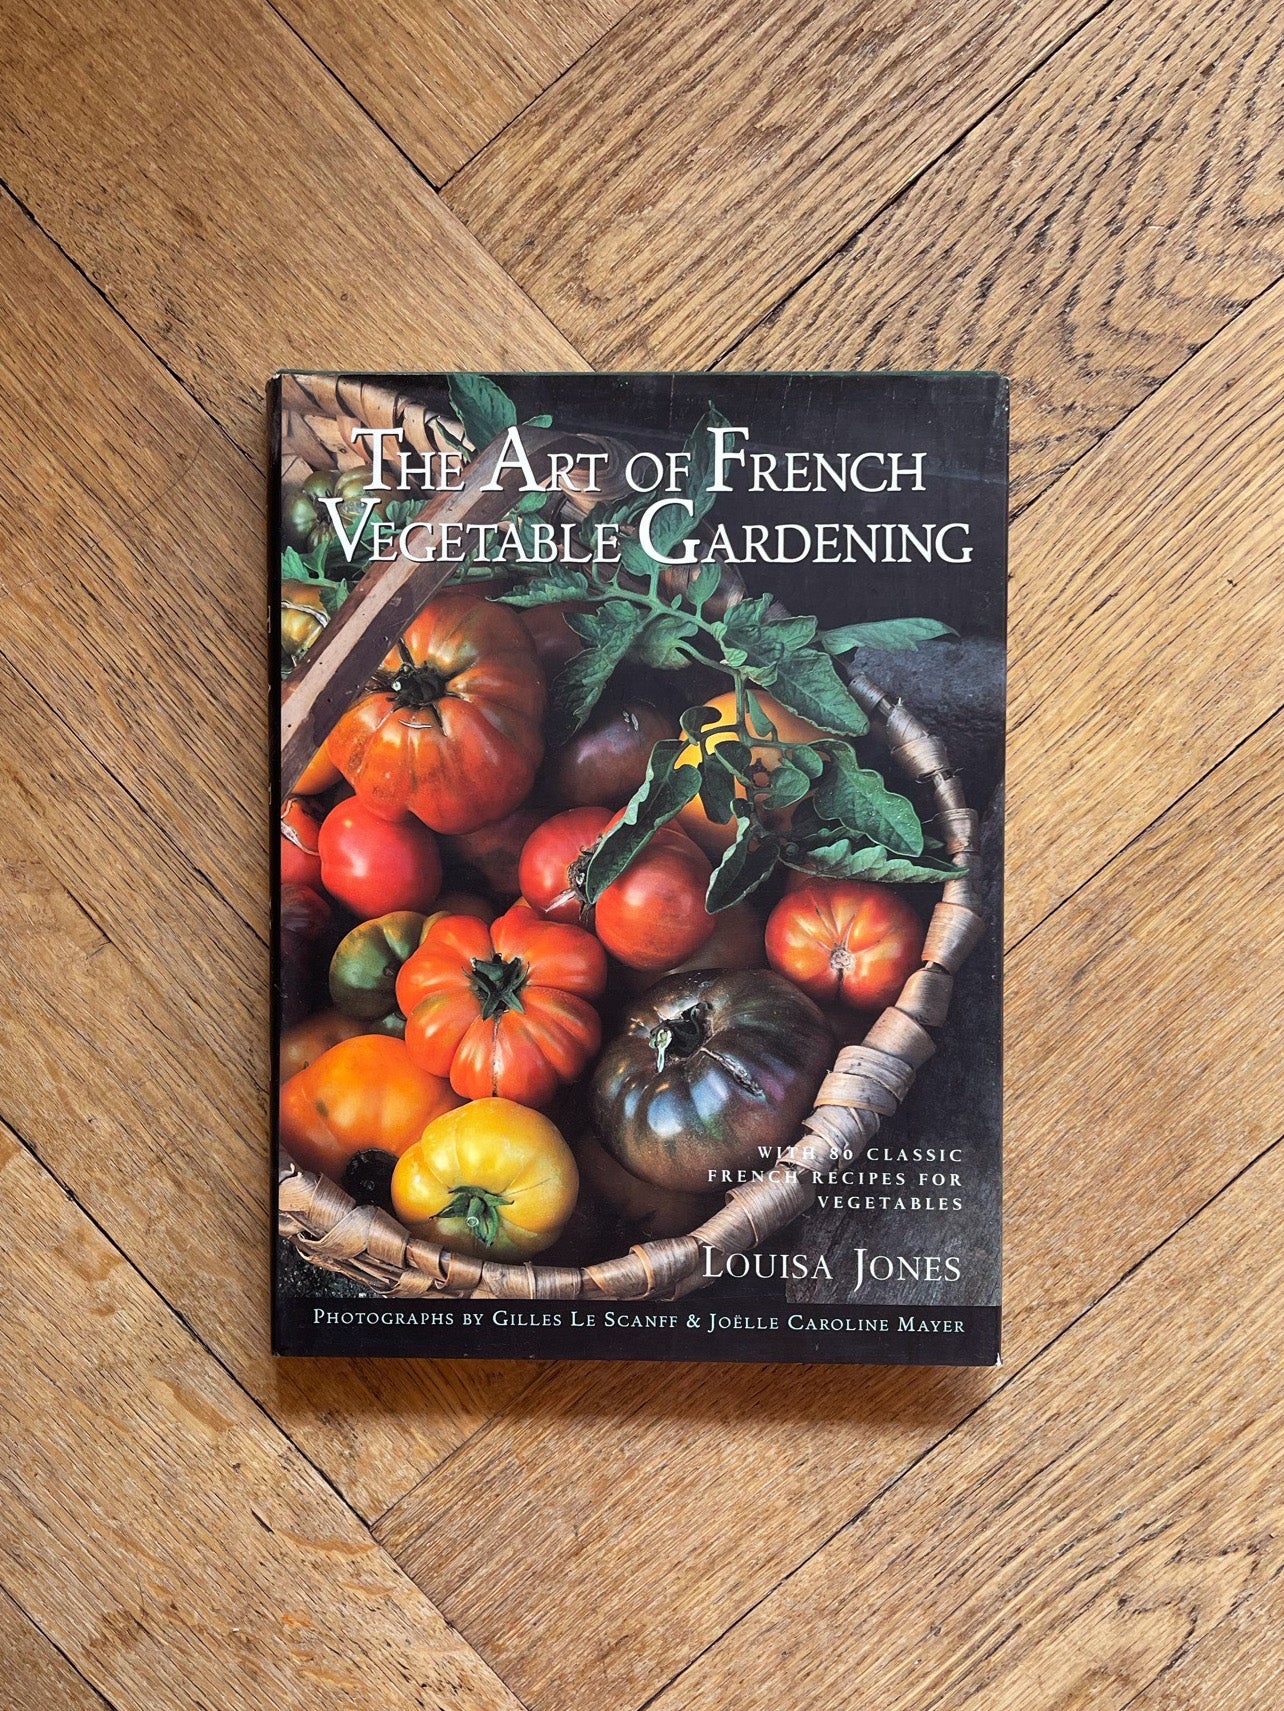 The Art of French Vegetable Gardening by Louisa Jones